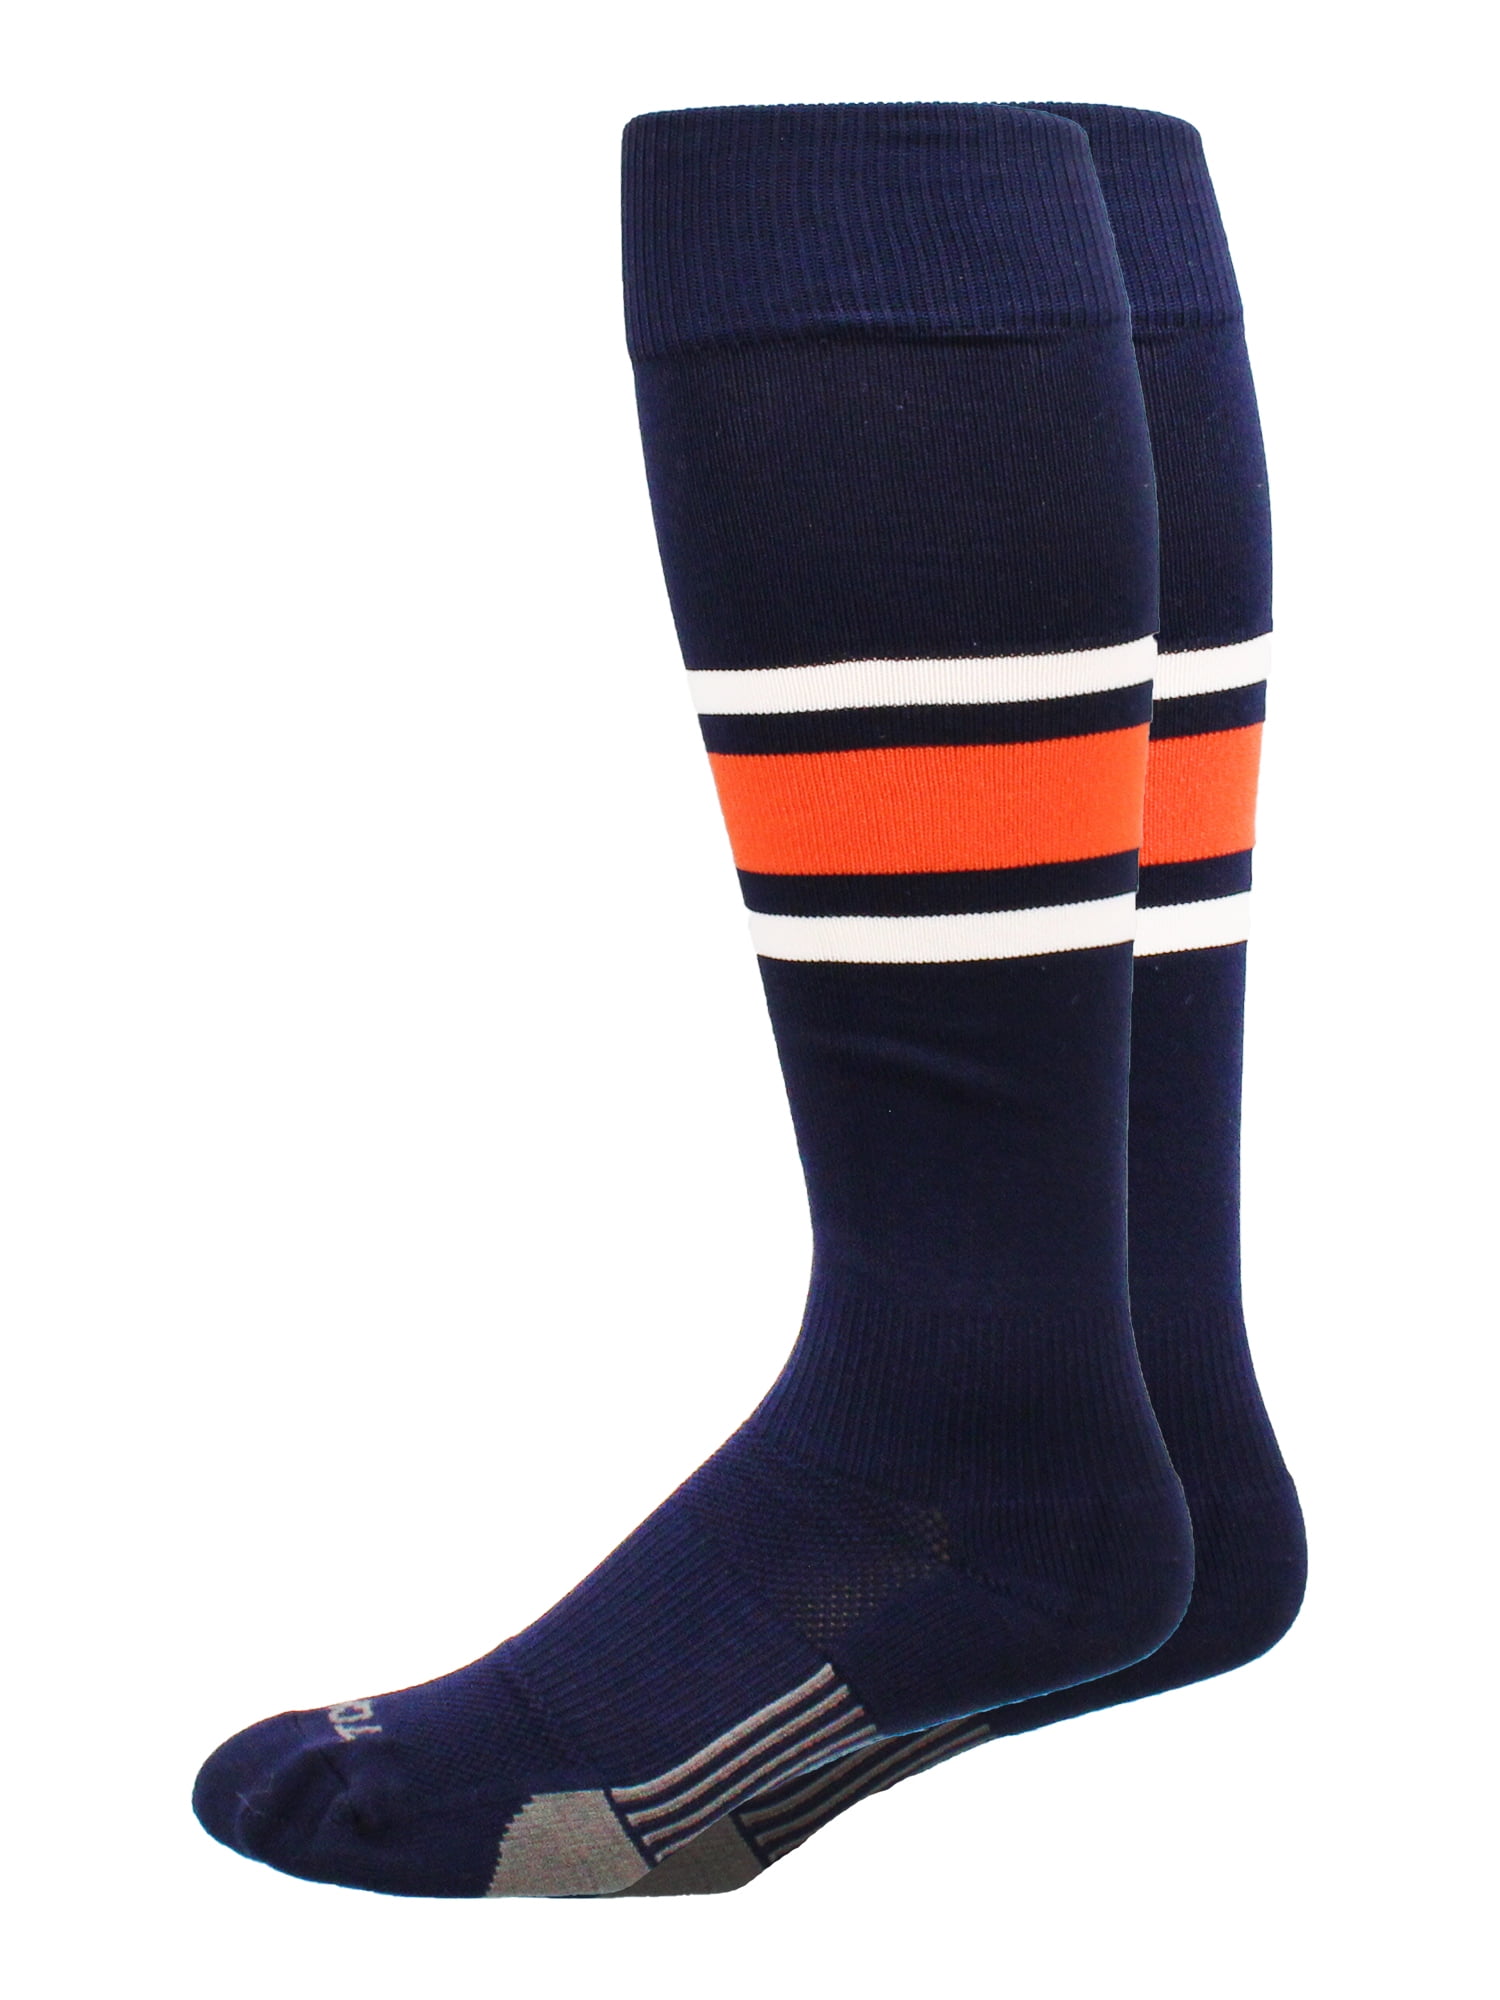 Multiple Colors Dugout 3 Stripe Softball Socks